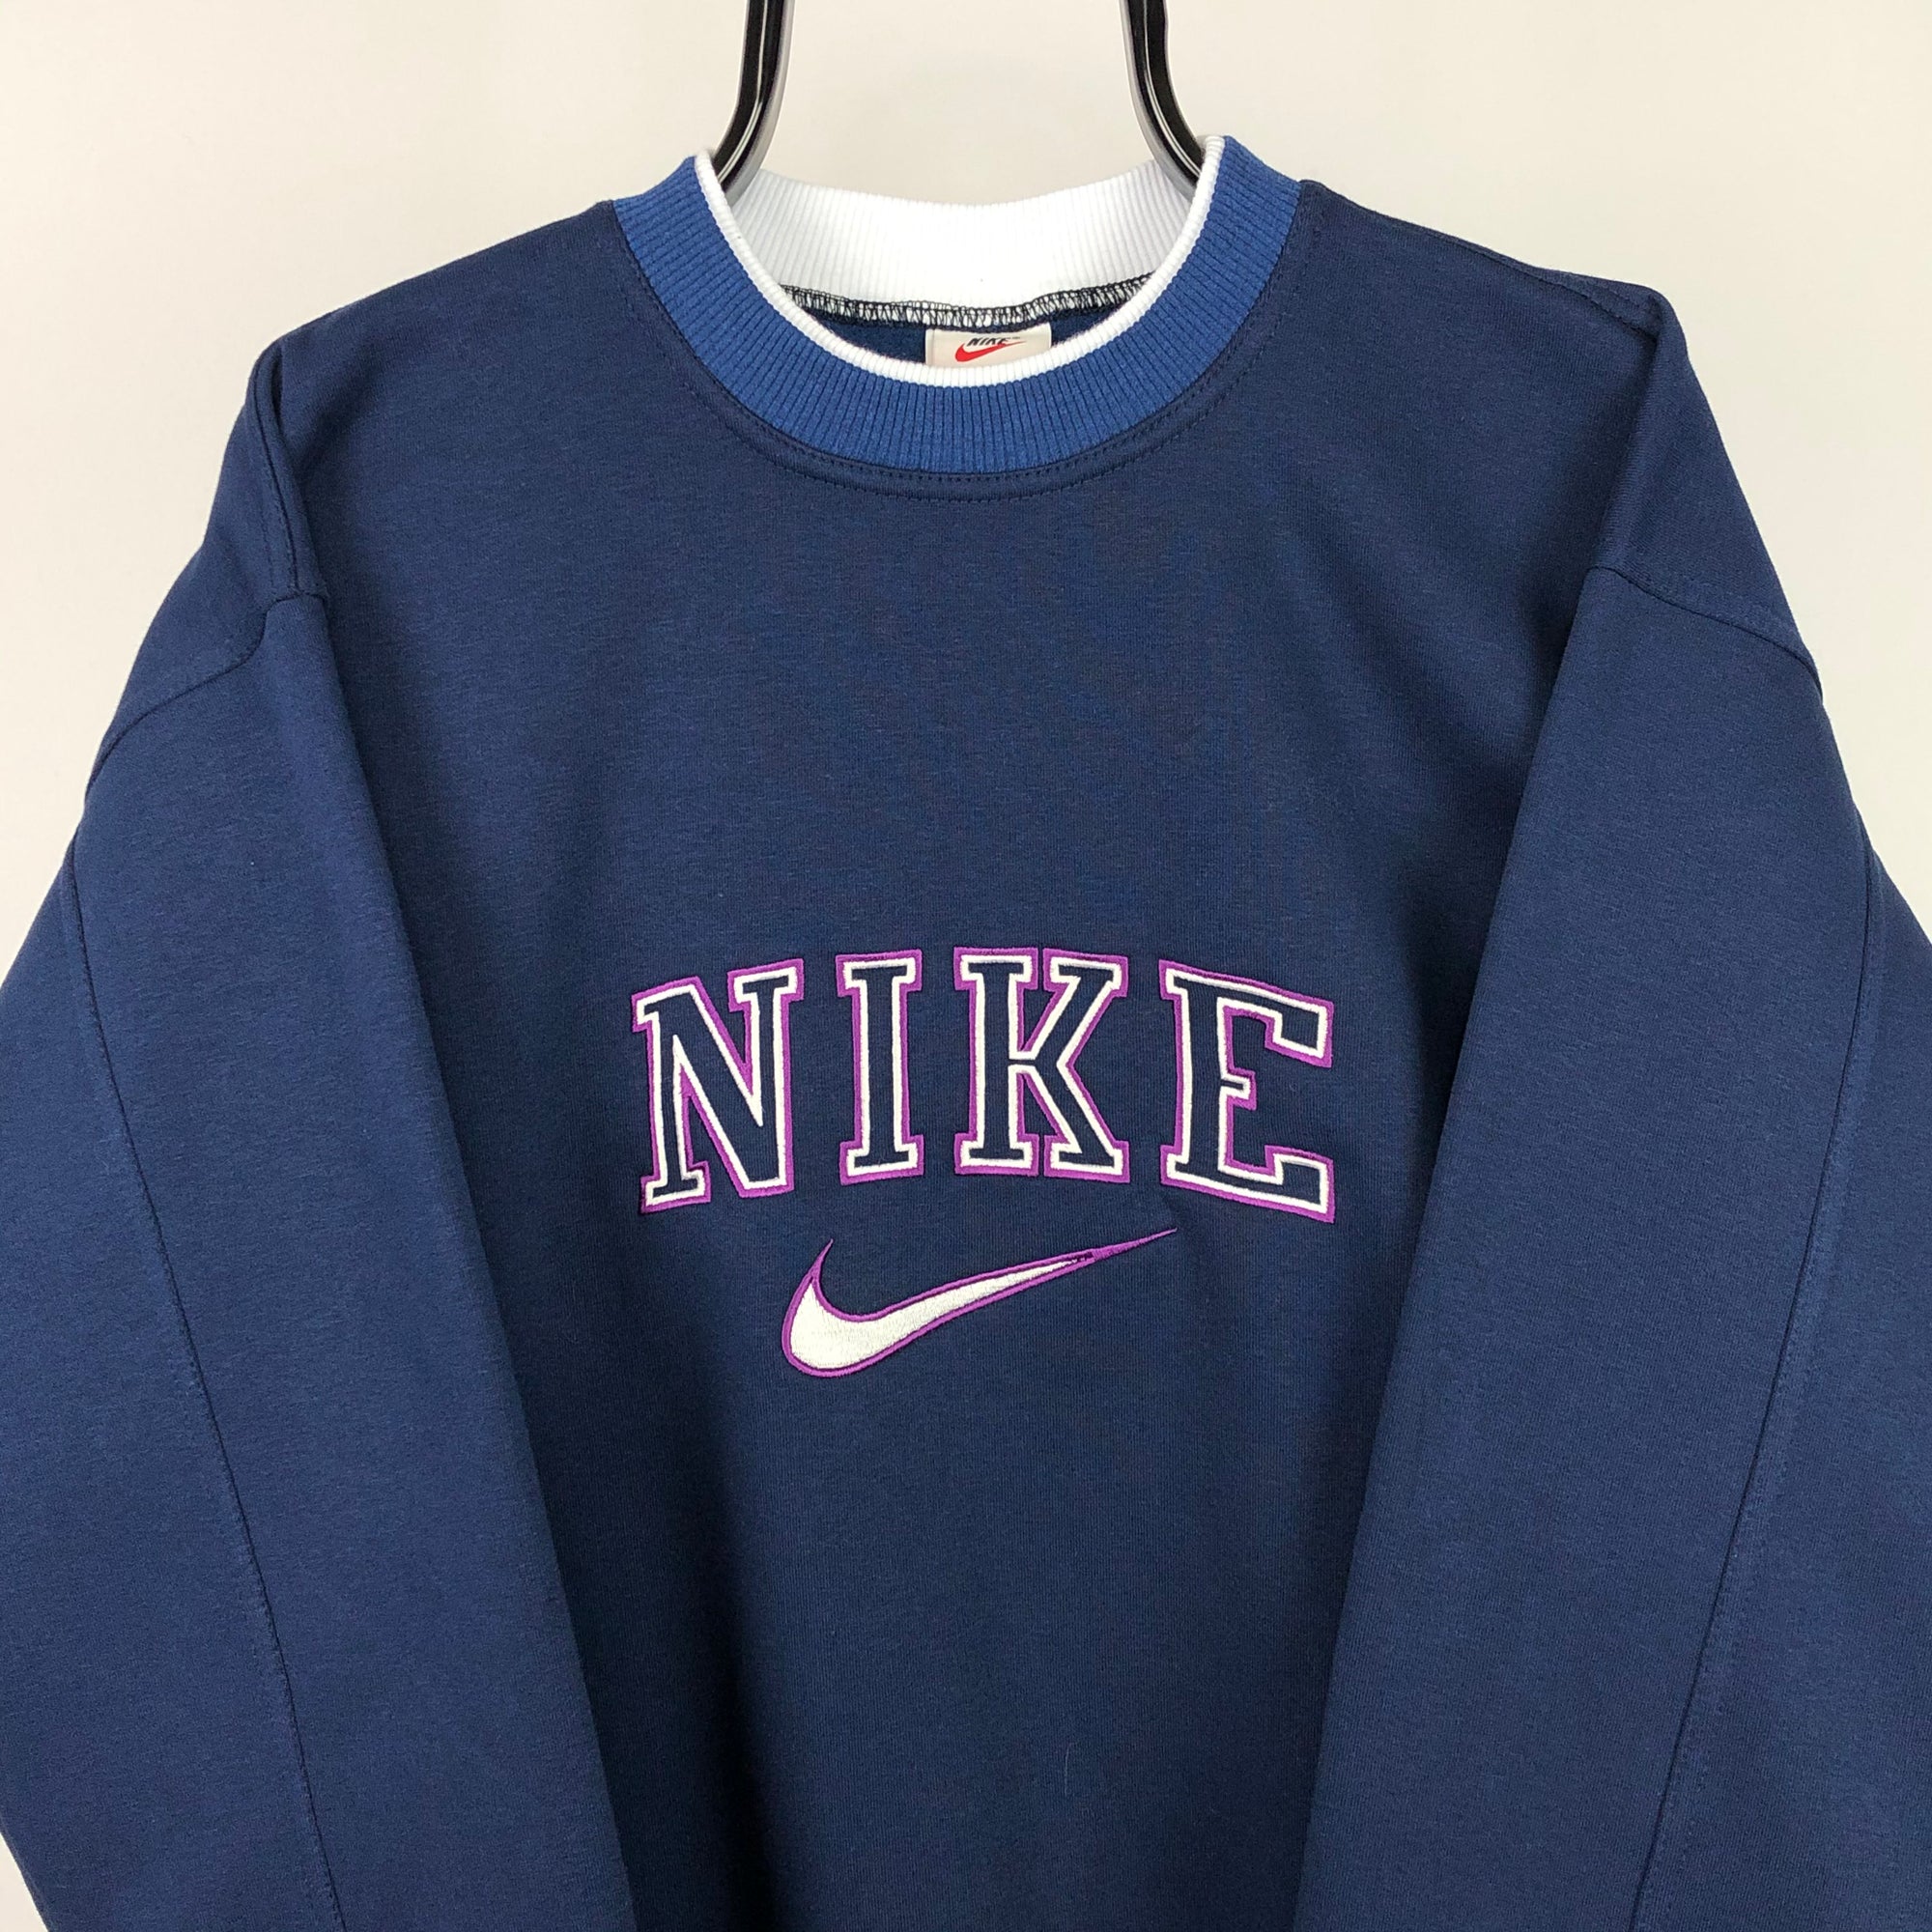 Vintage Nike Spellout Sweatshirt in Navy/Purple - Men's Medium/Women's Large